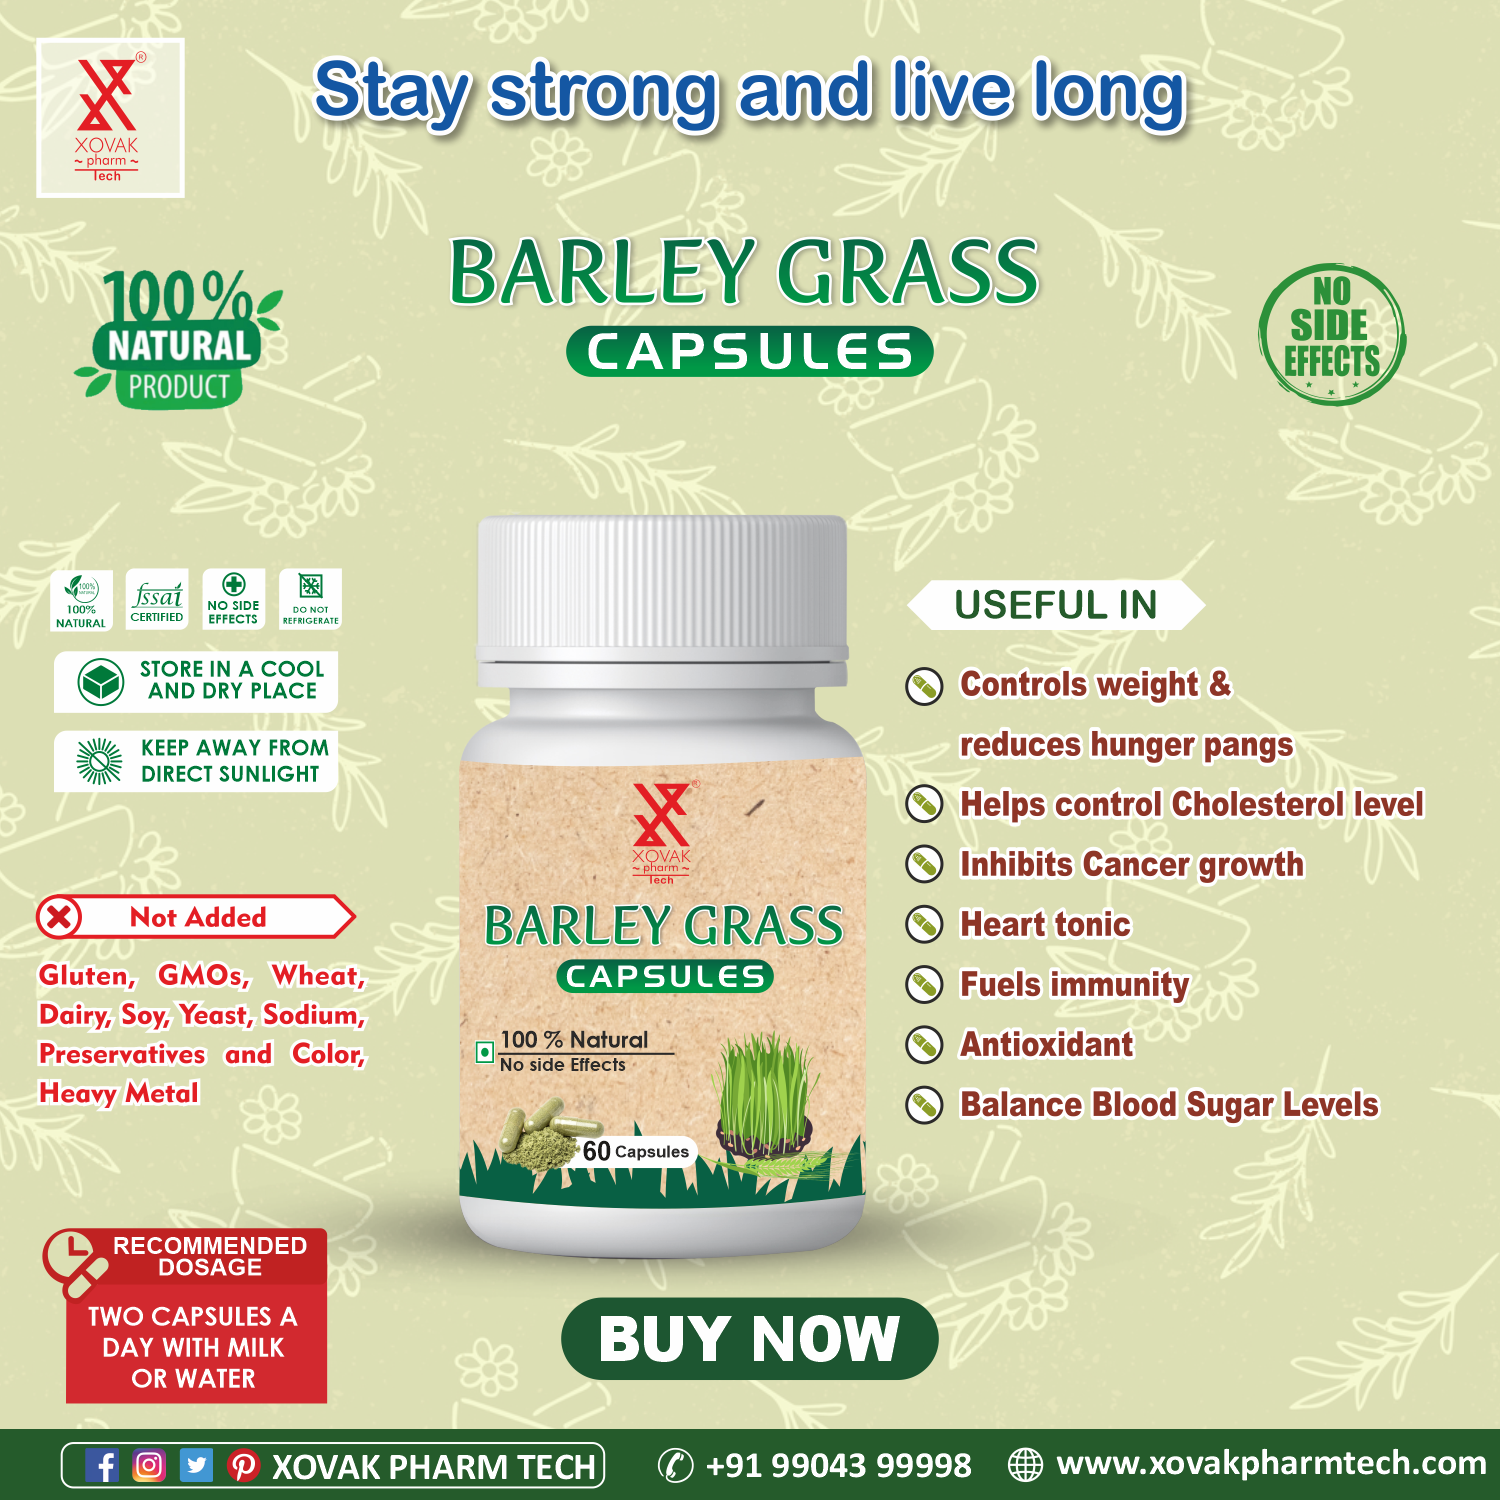 Buy Xovak Organic Barley Grass Capsules (60caps) at Best Price Online